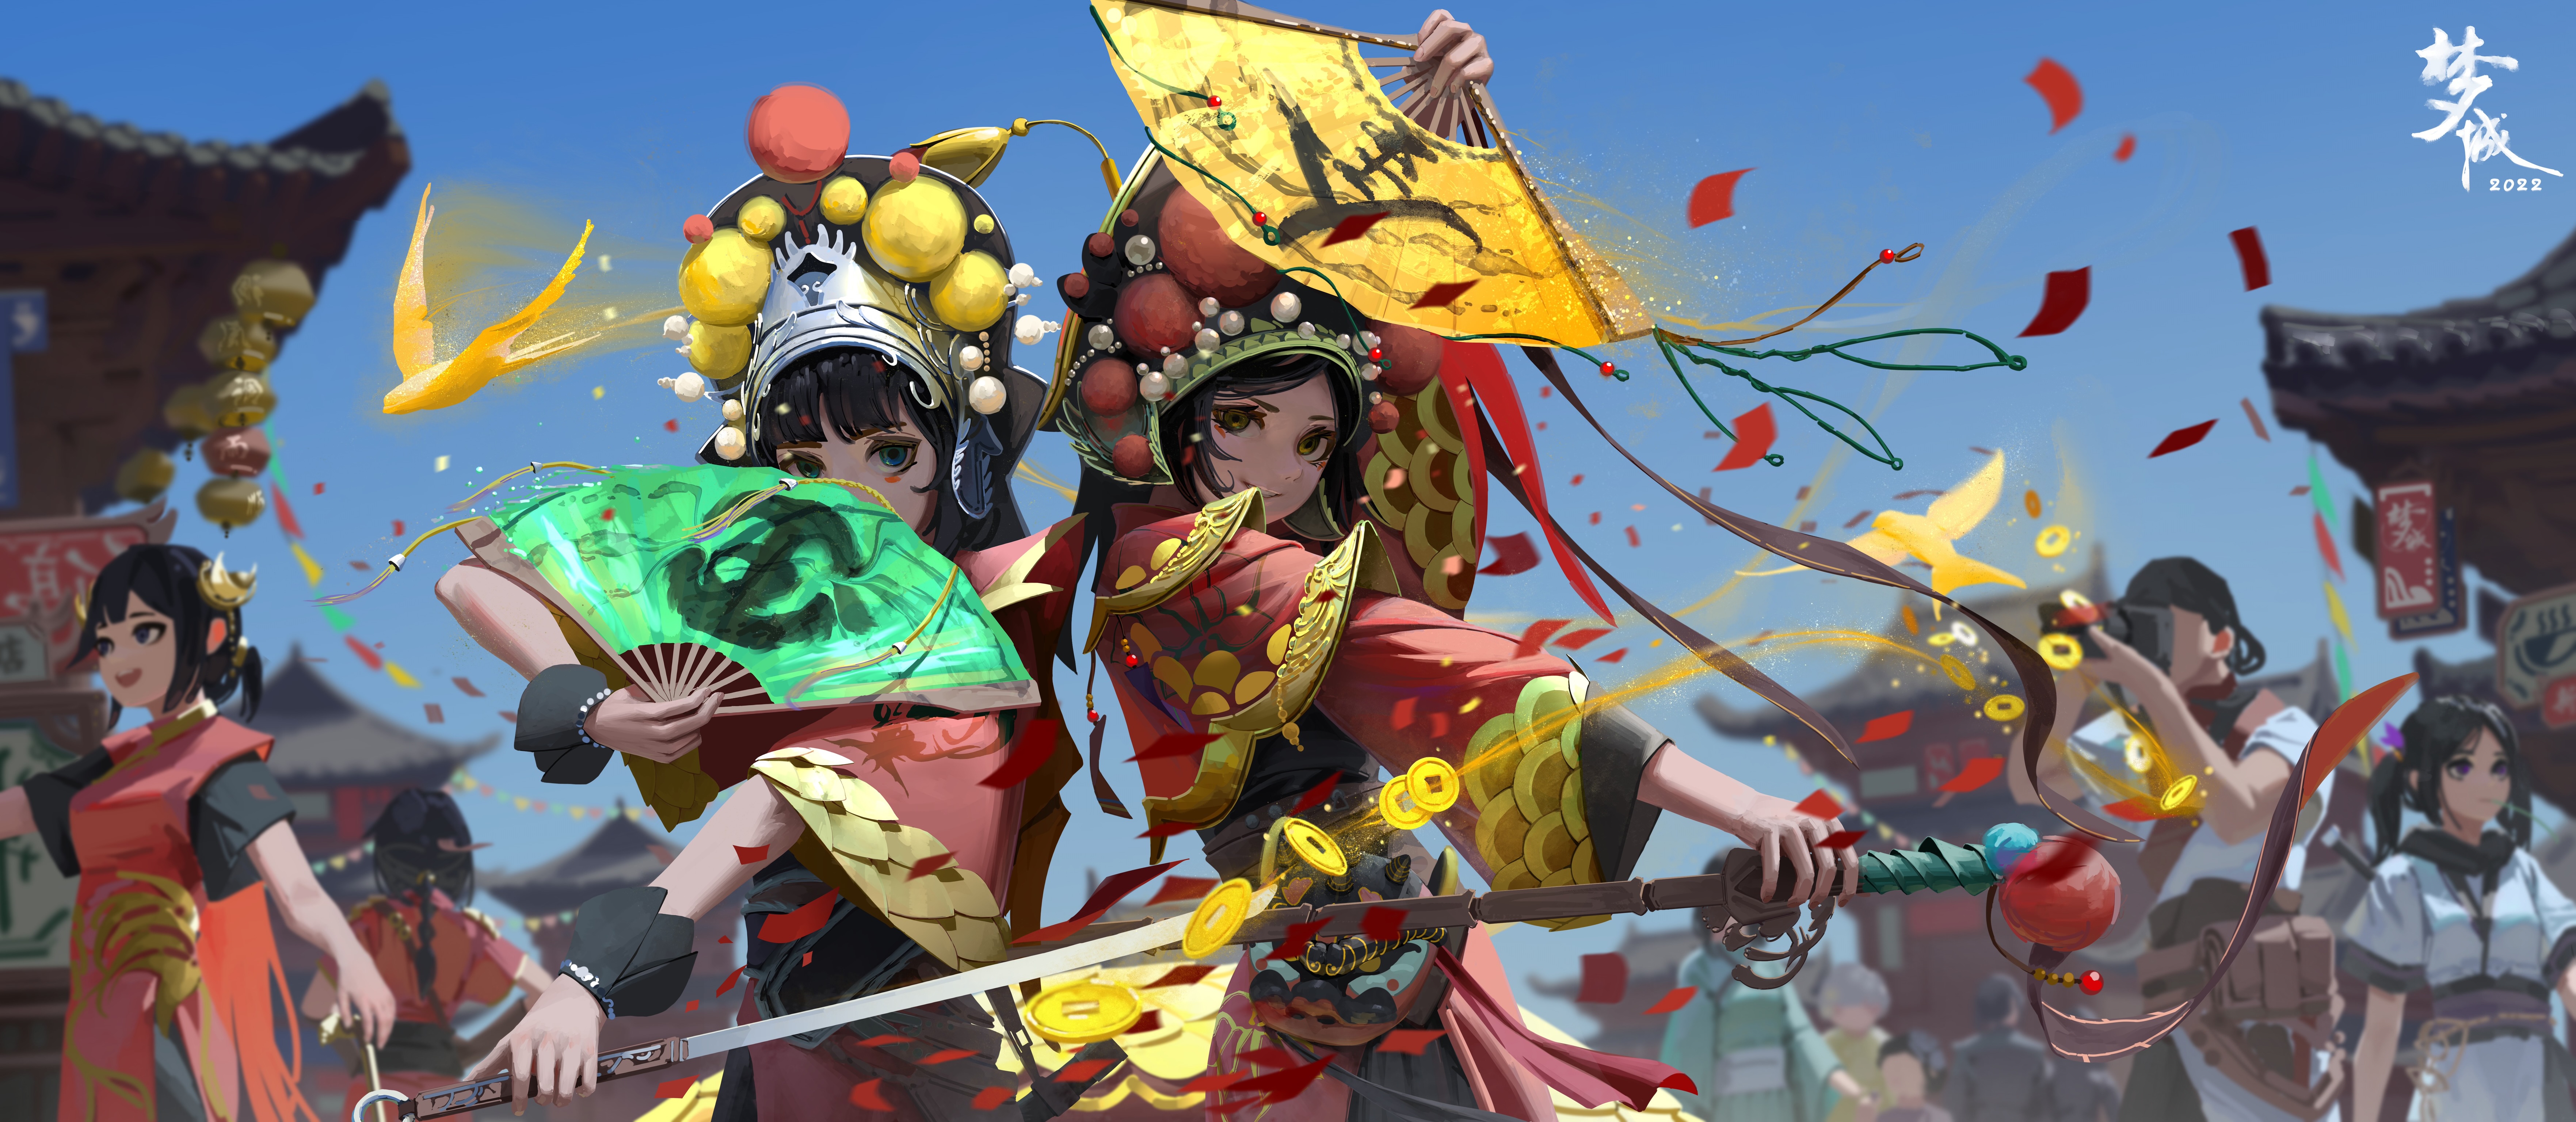 Anime 7052x3072 Beijing opera fans anime girls women with swords two women petals China